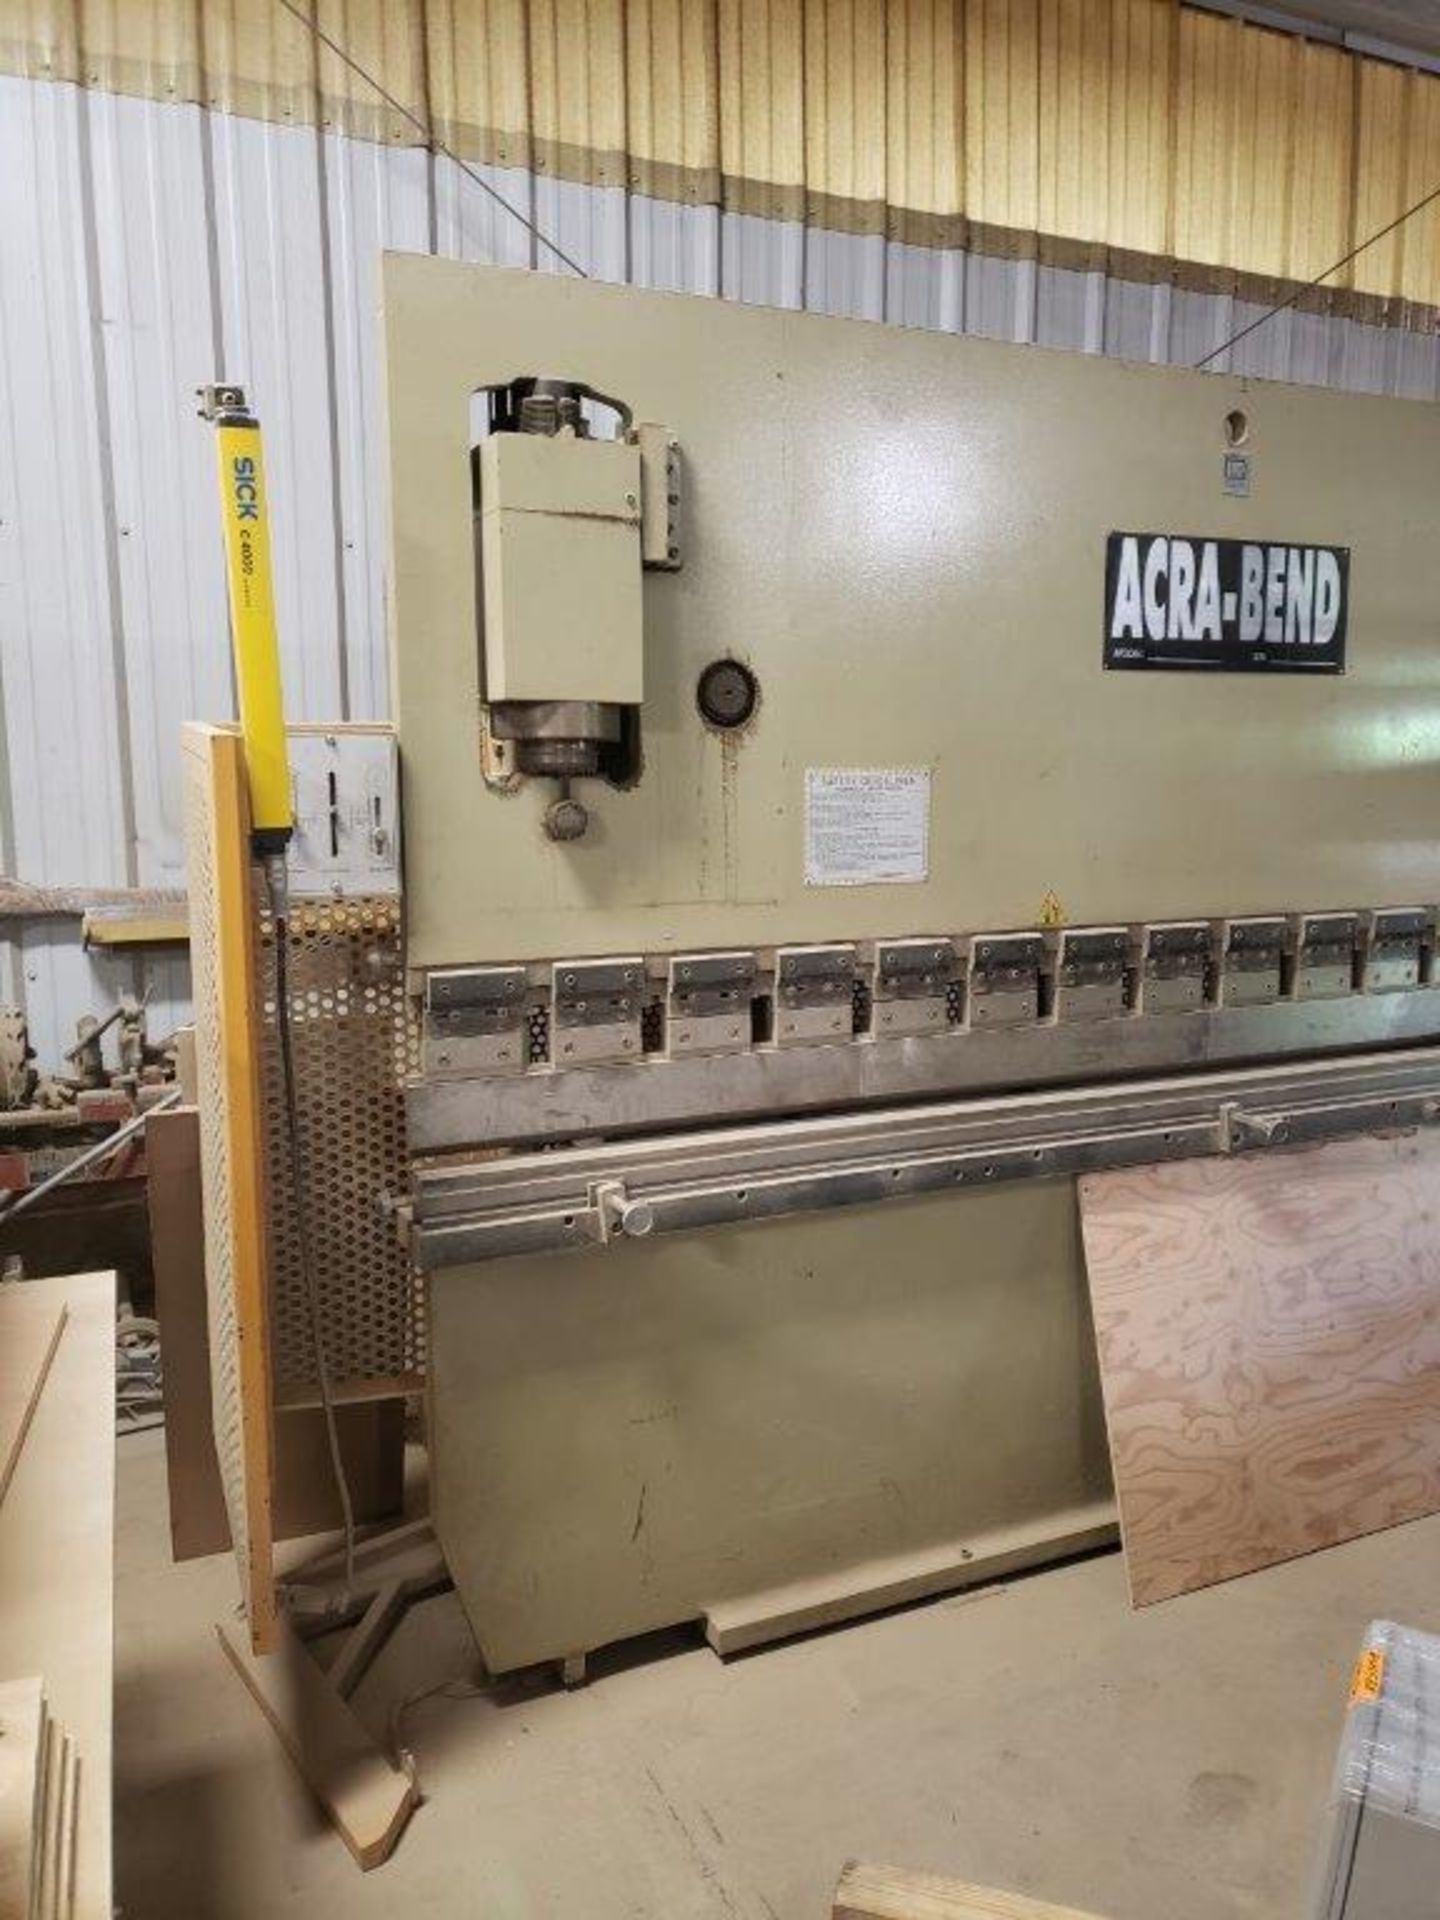 ACRA BEND Press Brake, CNC, 88 Tons x 10ft